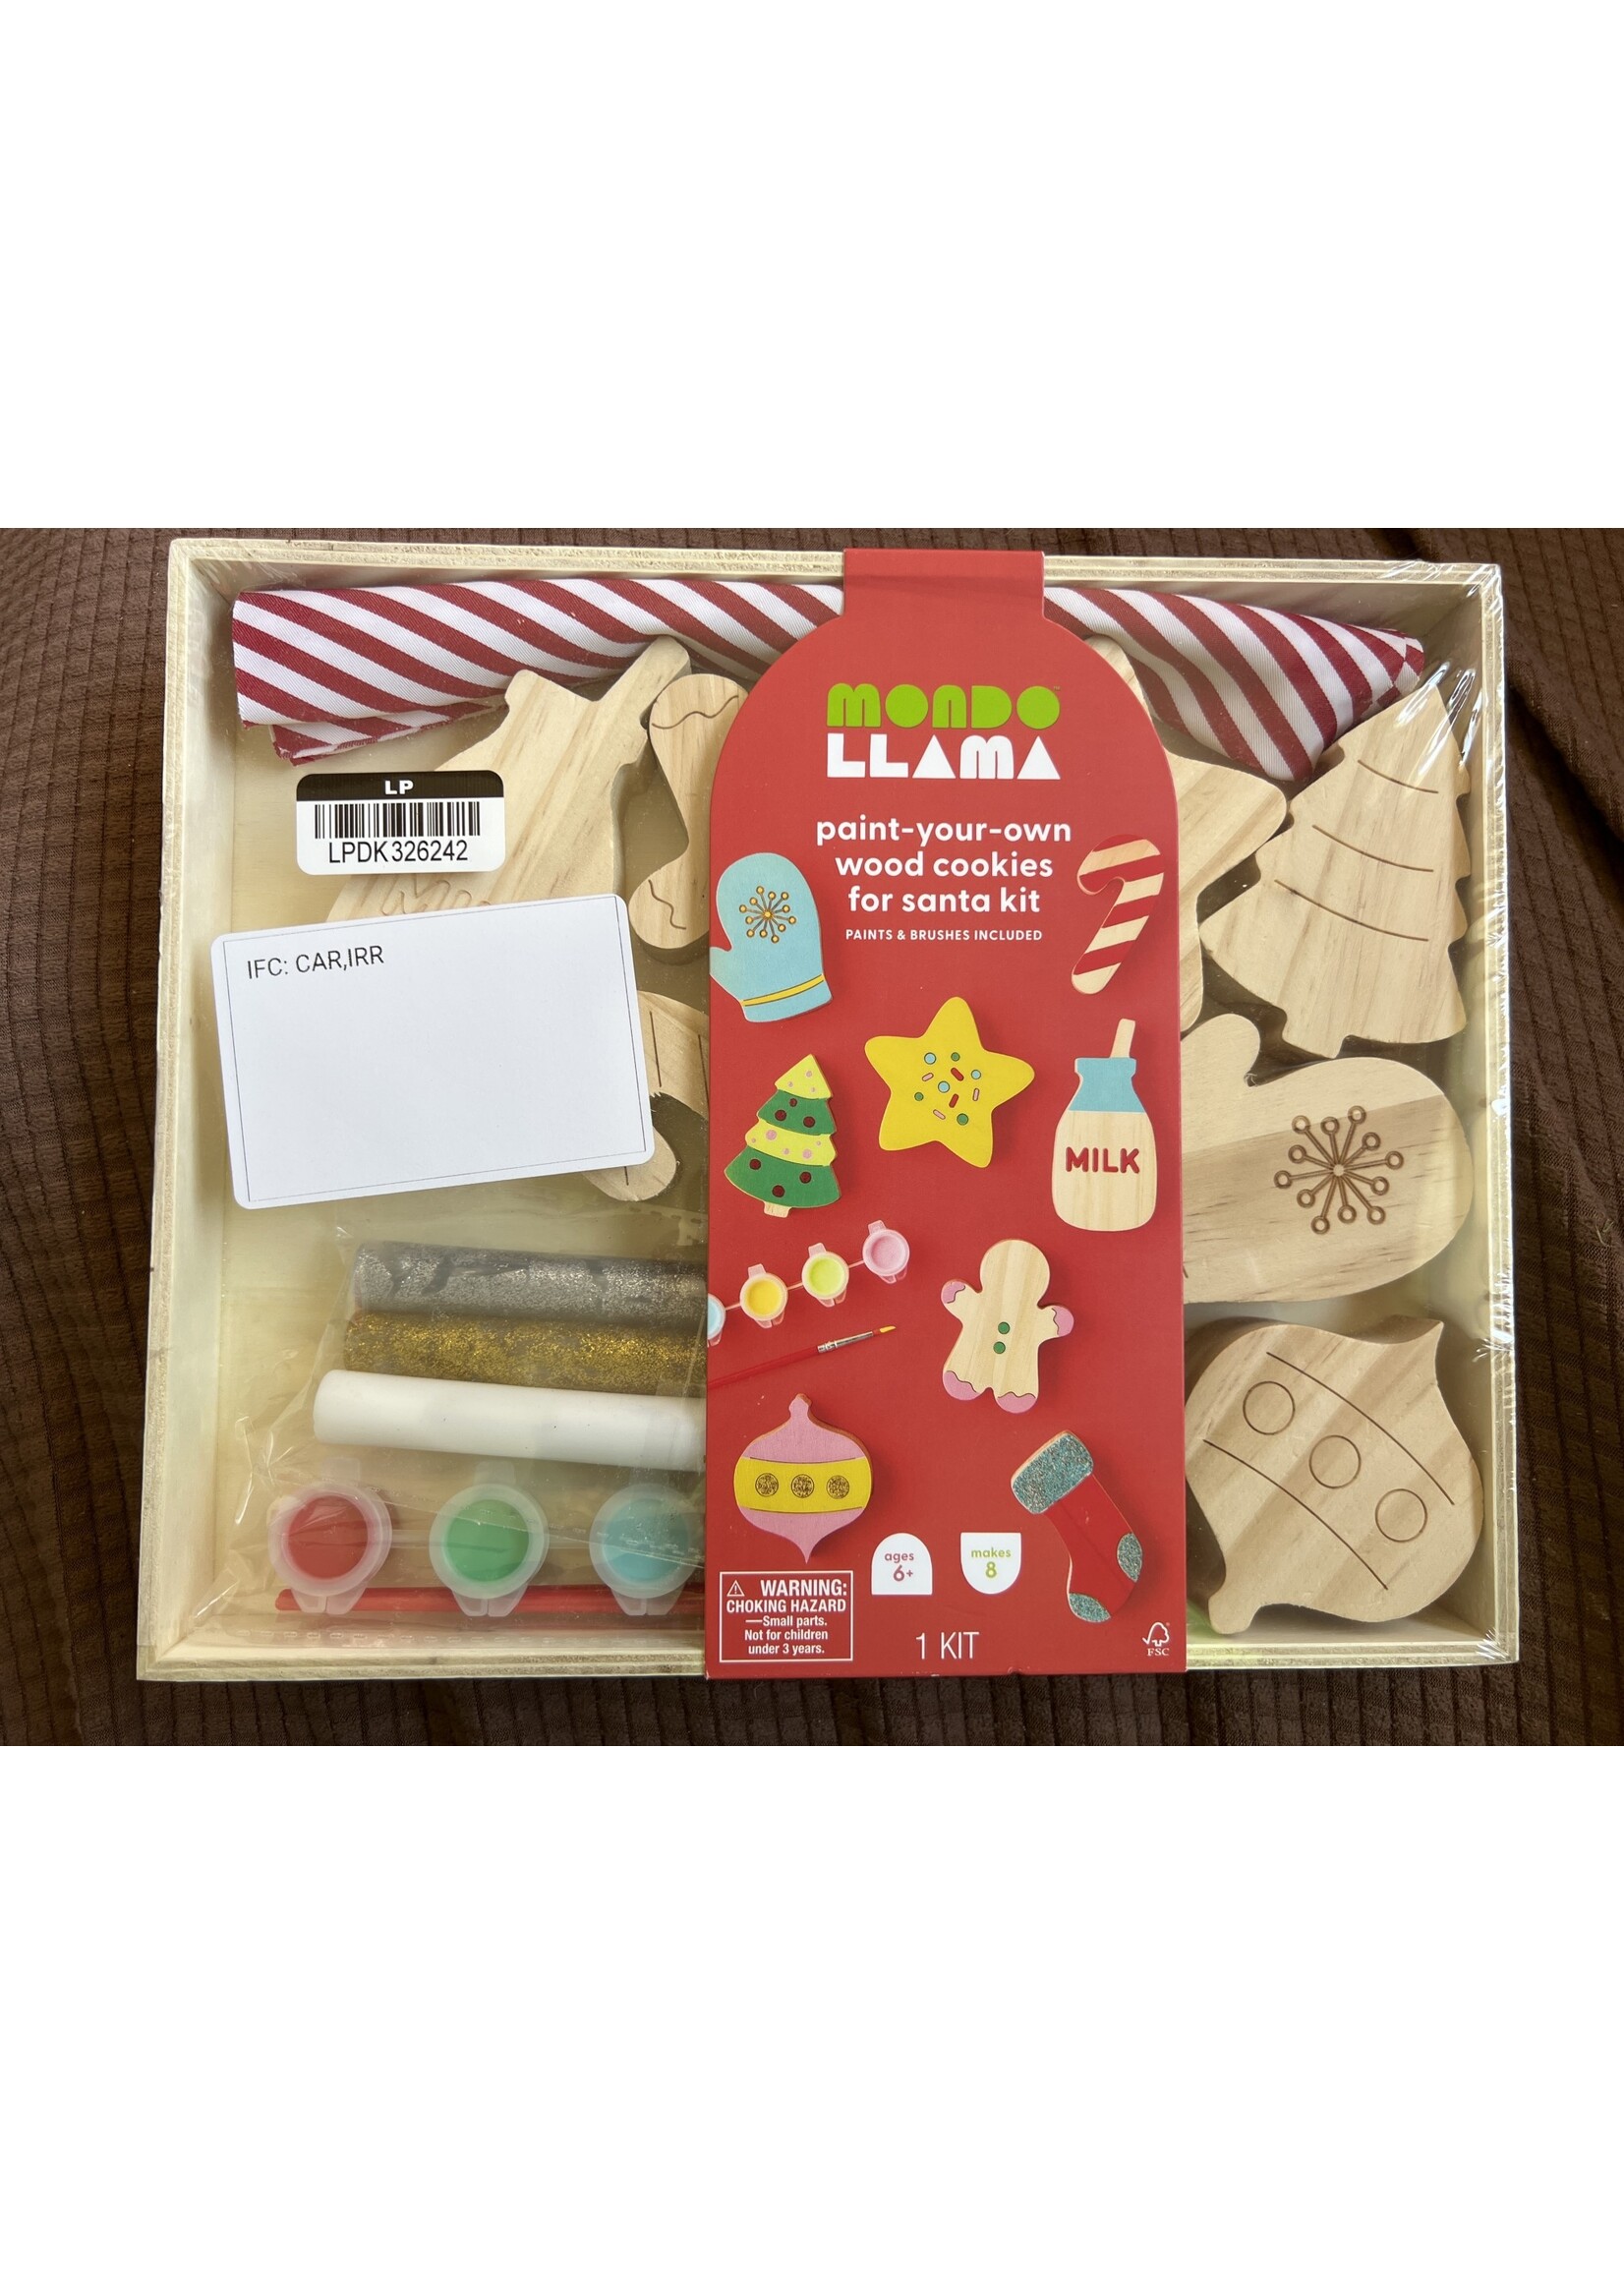 Paint Your Own Wood Cookies for Santa Kit  - Mondo Llama